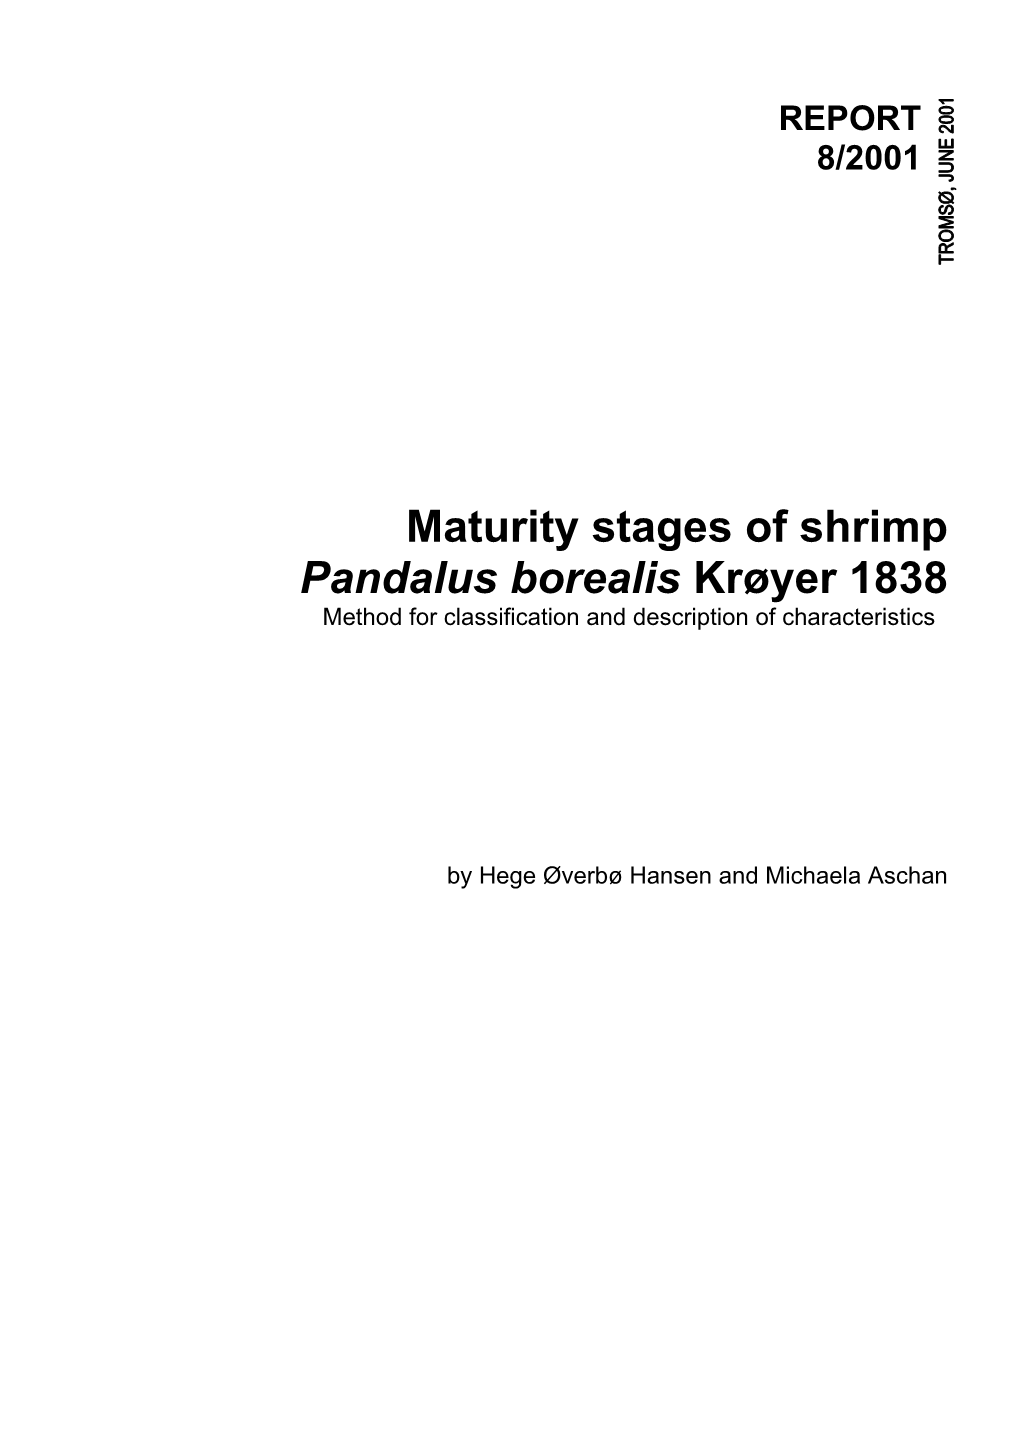 Maturity Stages of Shrimp Pandalus Borealis Krøyer 1838